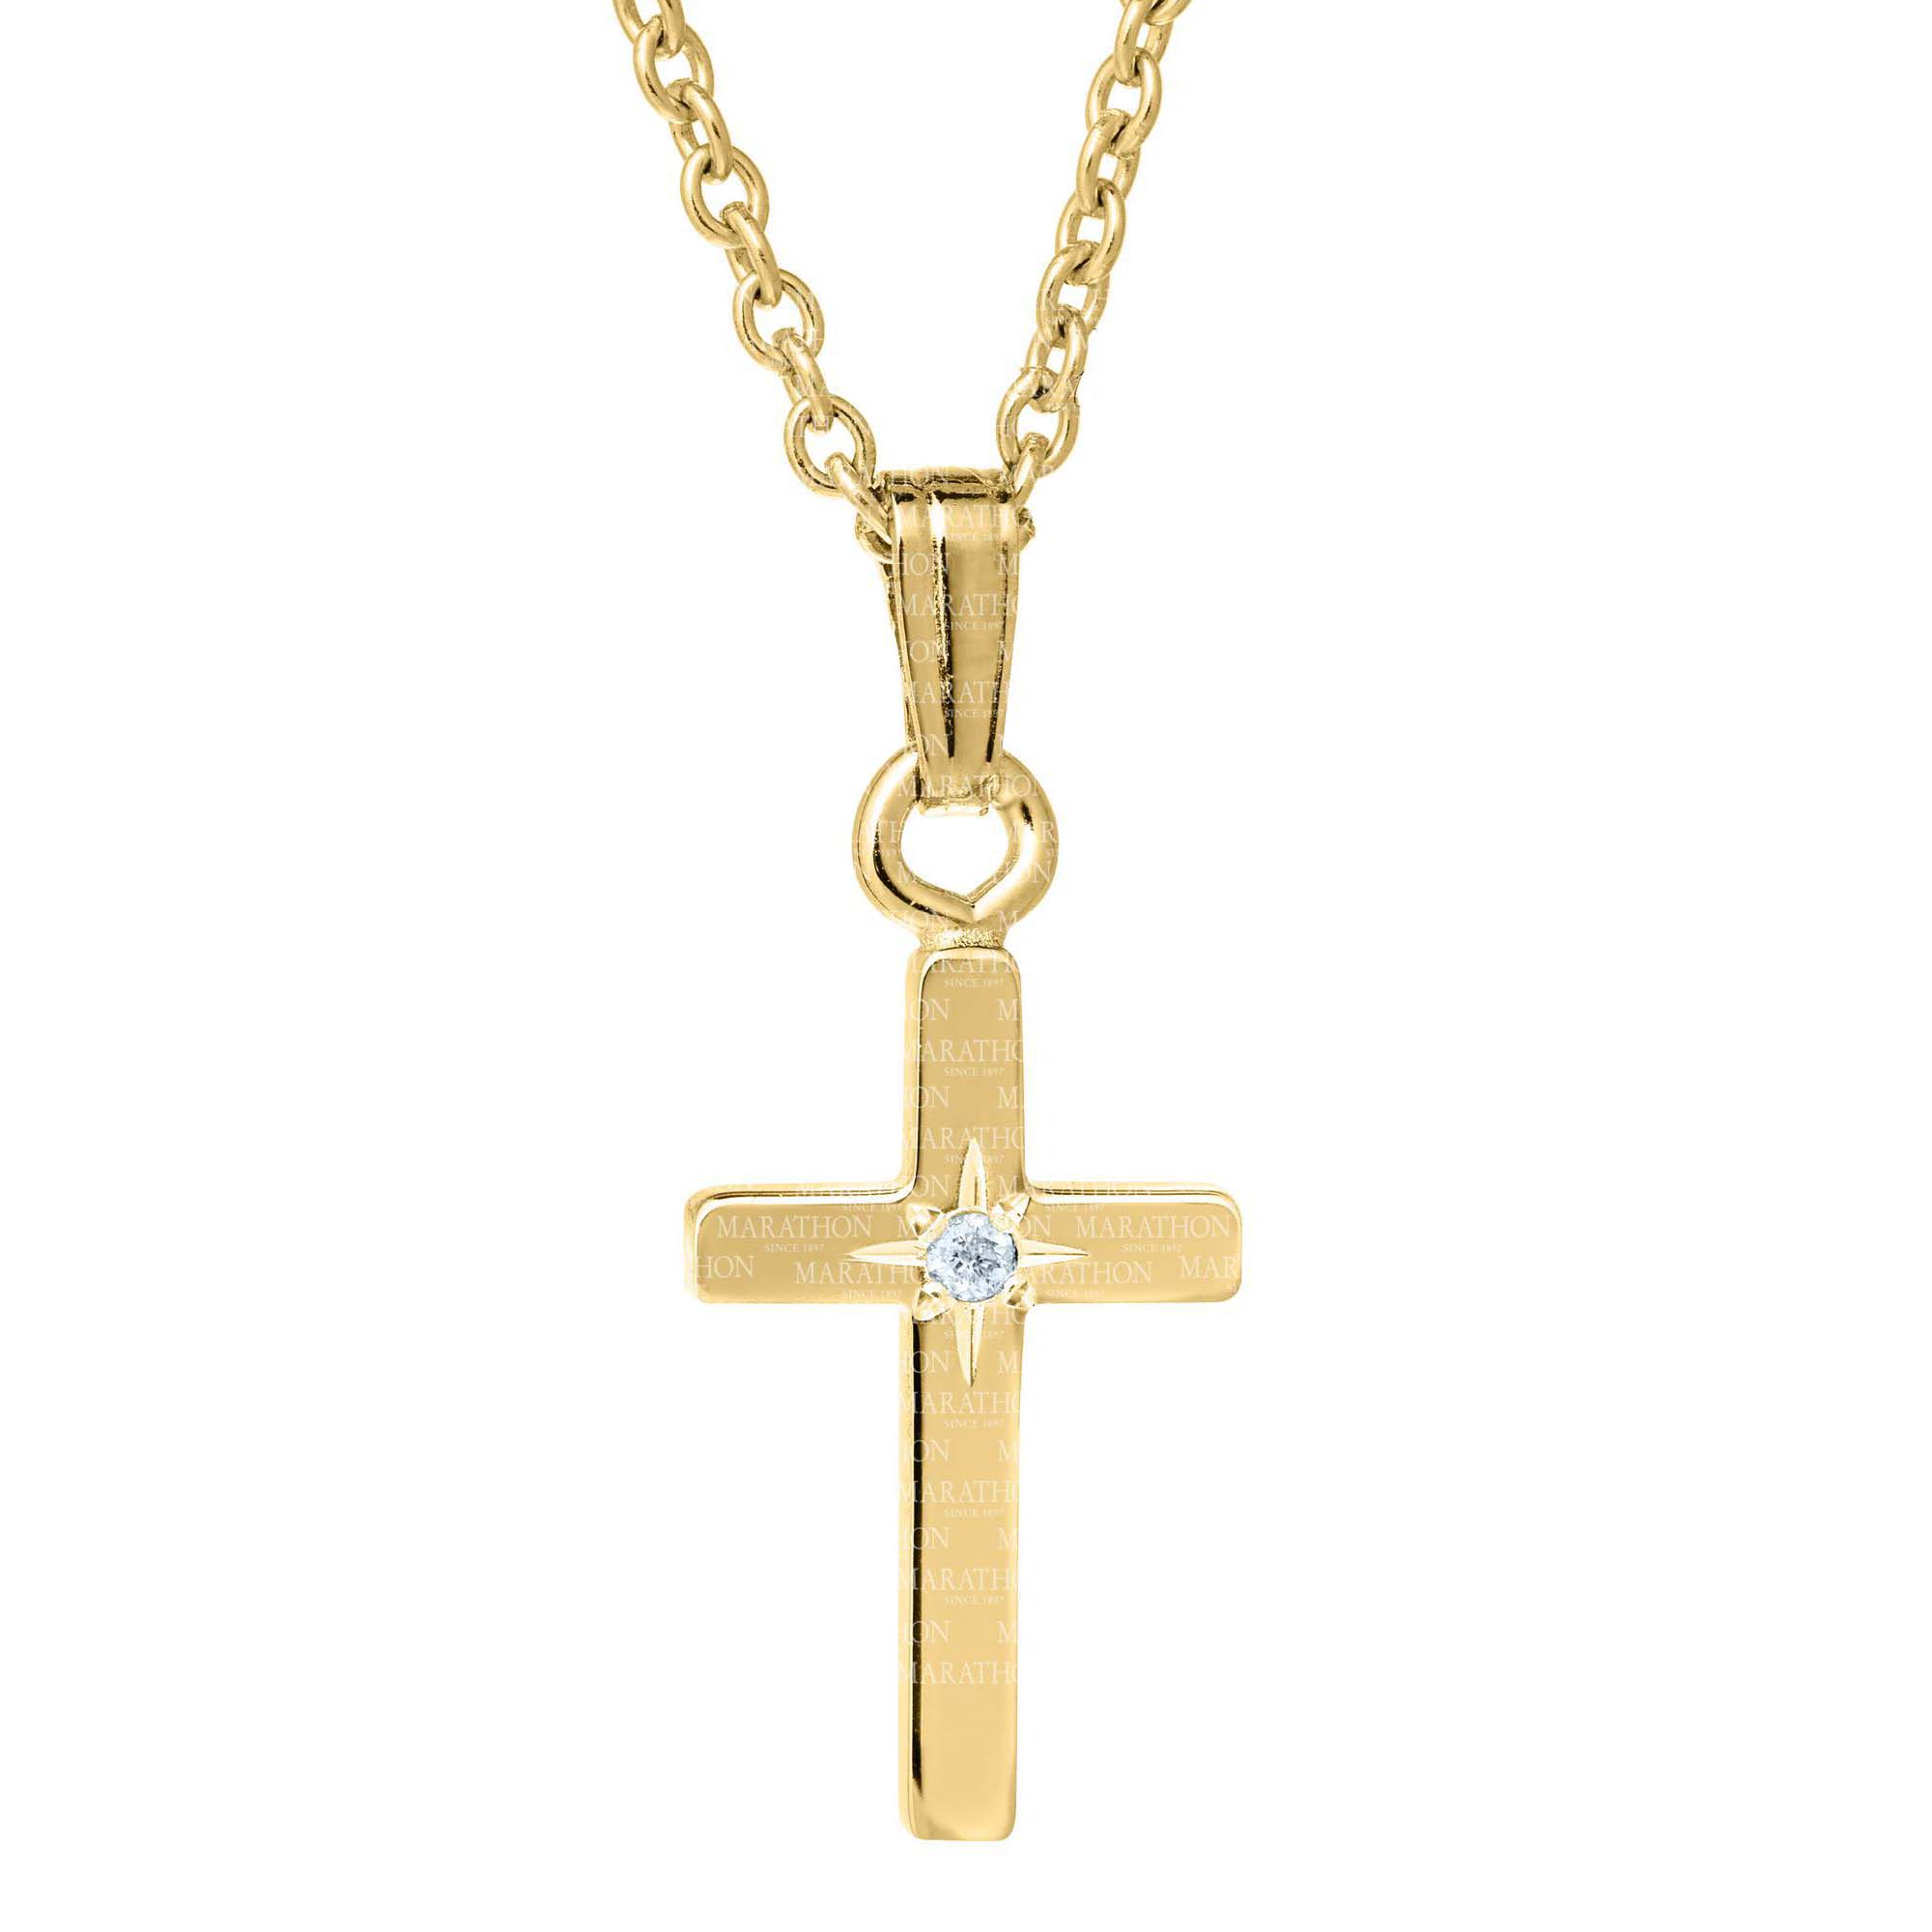 14K Gold-Filled Diamond Cross Kids Pendant. 8x20mm. 15" chain. #12373